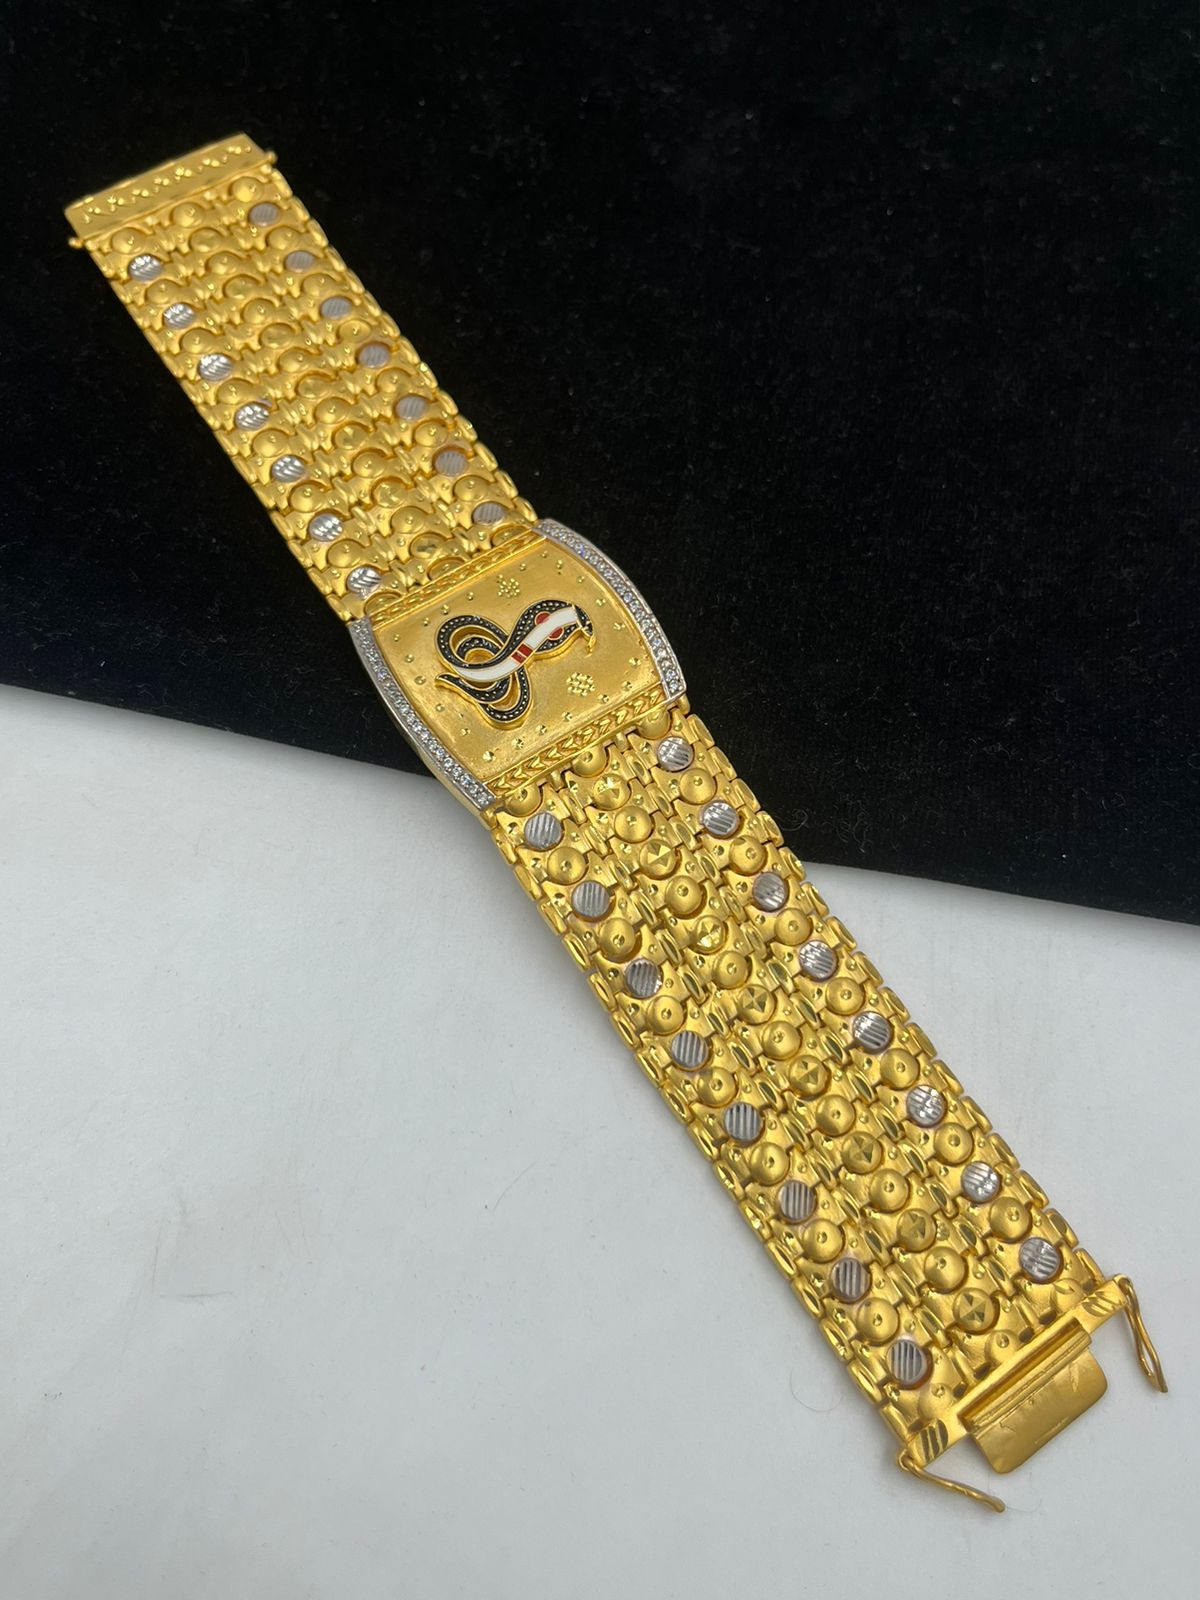 22K Gold Peacock 'Flexible' Bracelet with Cz - 235-GBR2182 in 9.500 Grams